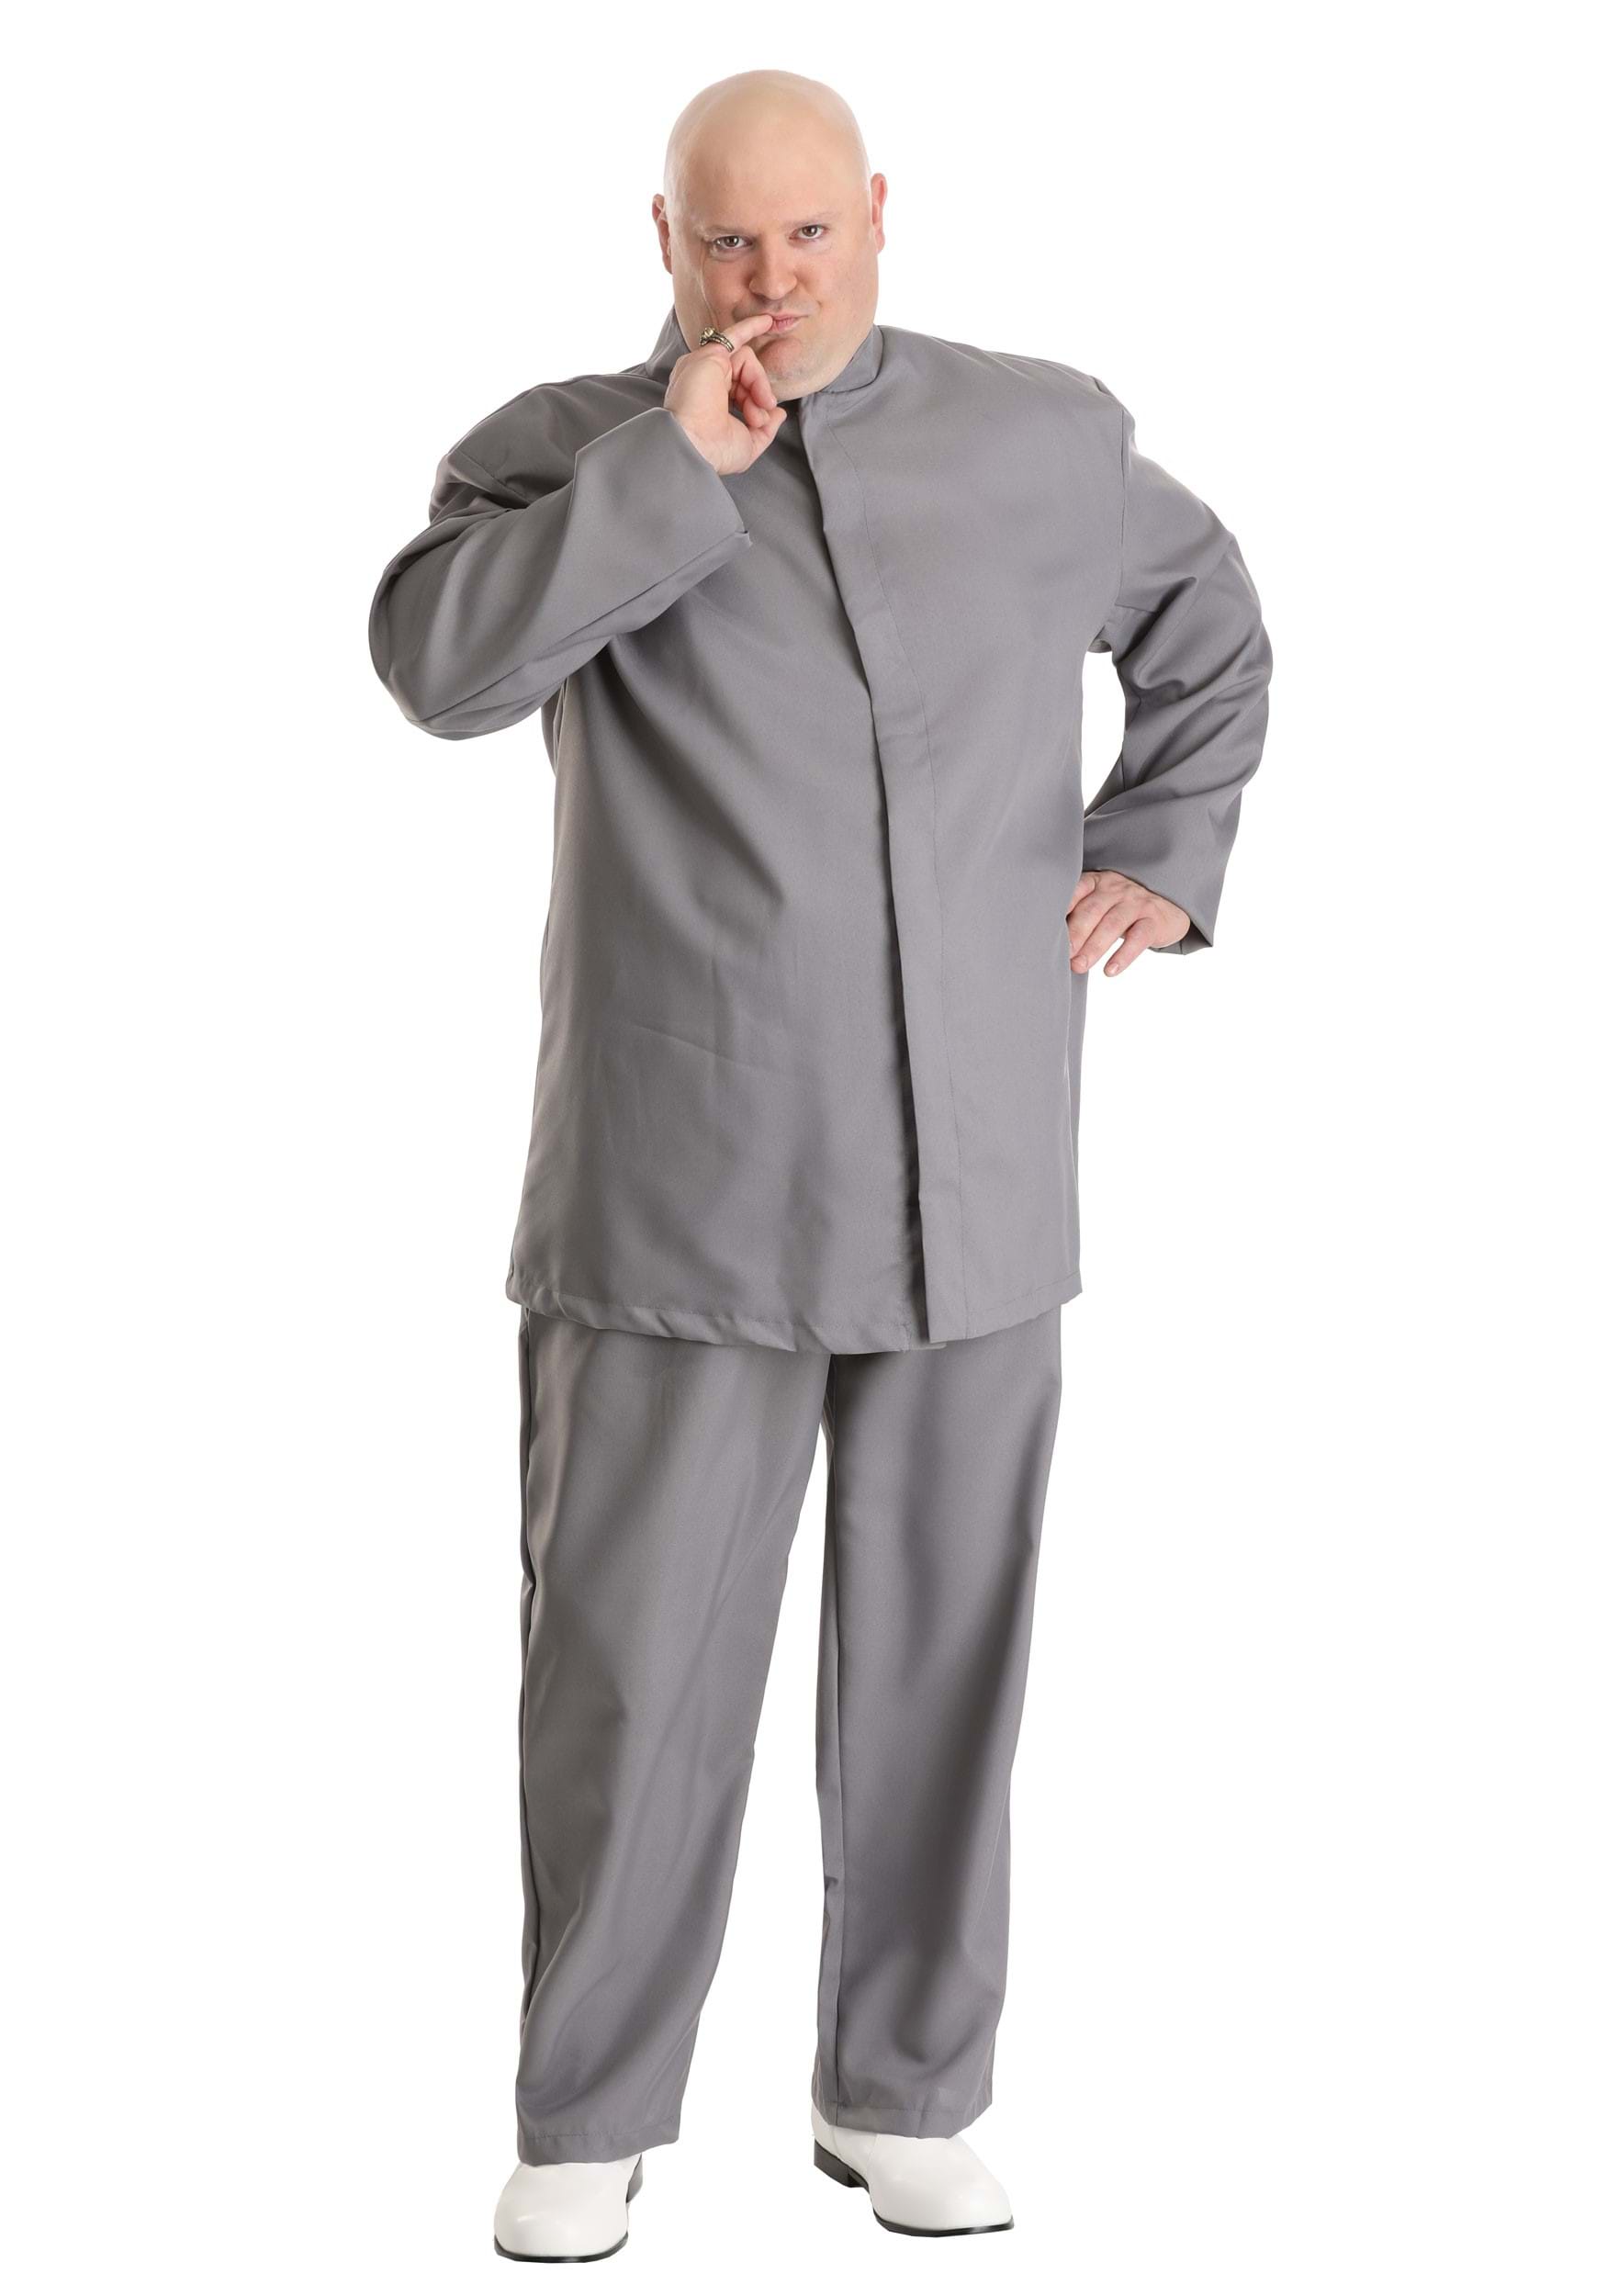 Photos - Fancy Dress FUN Costumes Men's Plus Size Gray Suit Costume | Movie Costumes